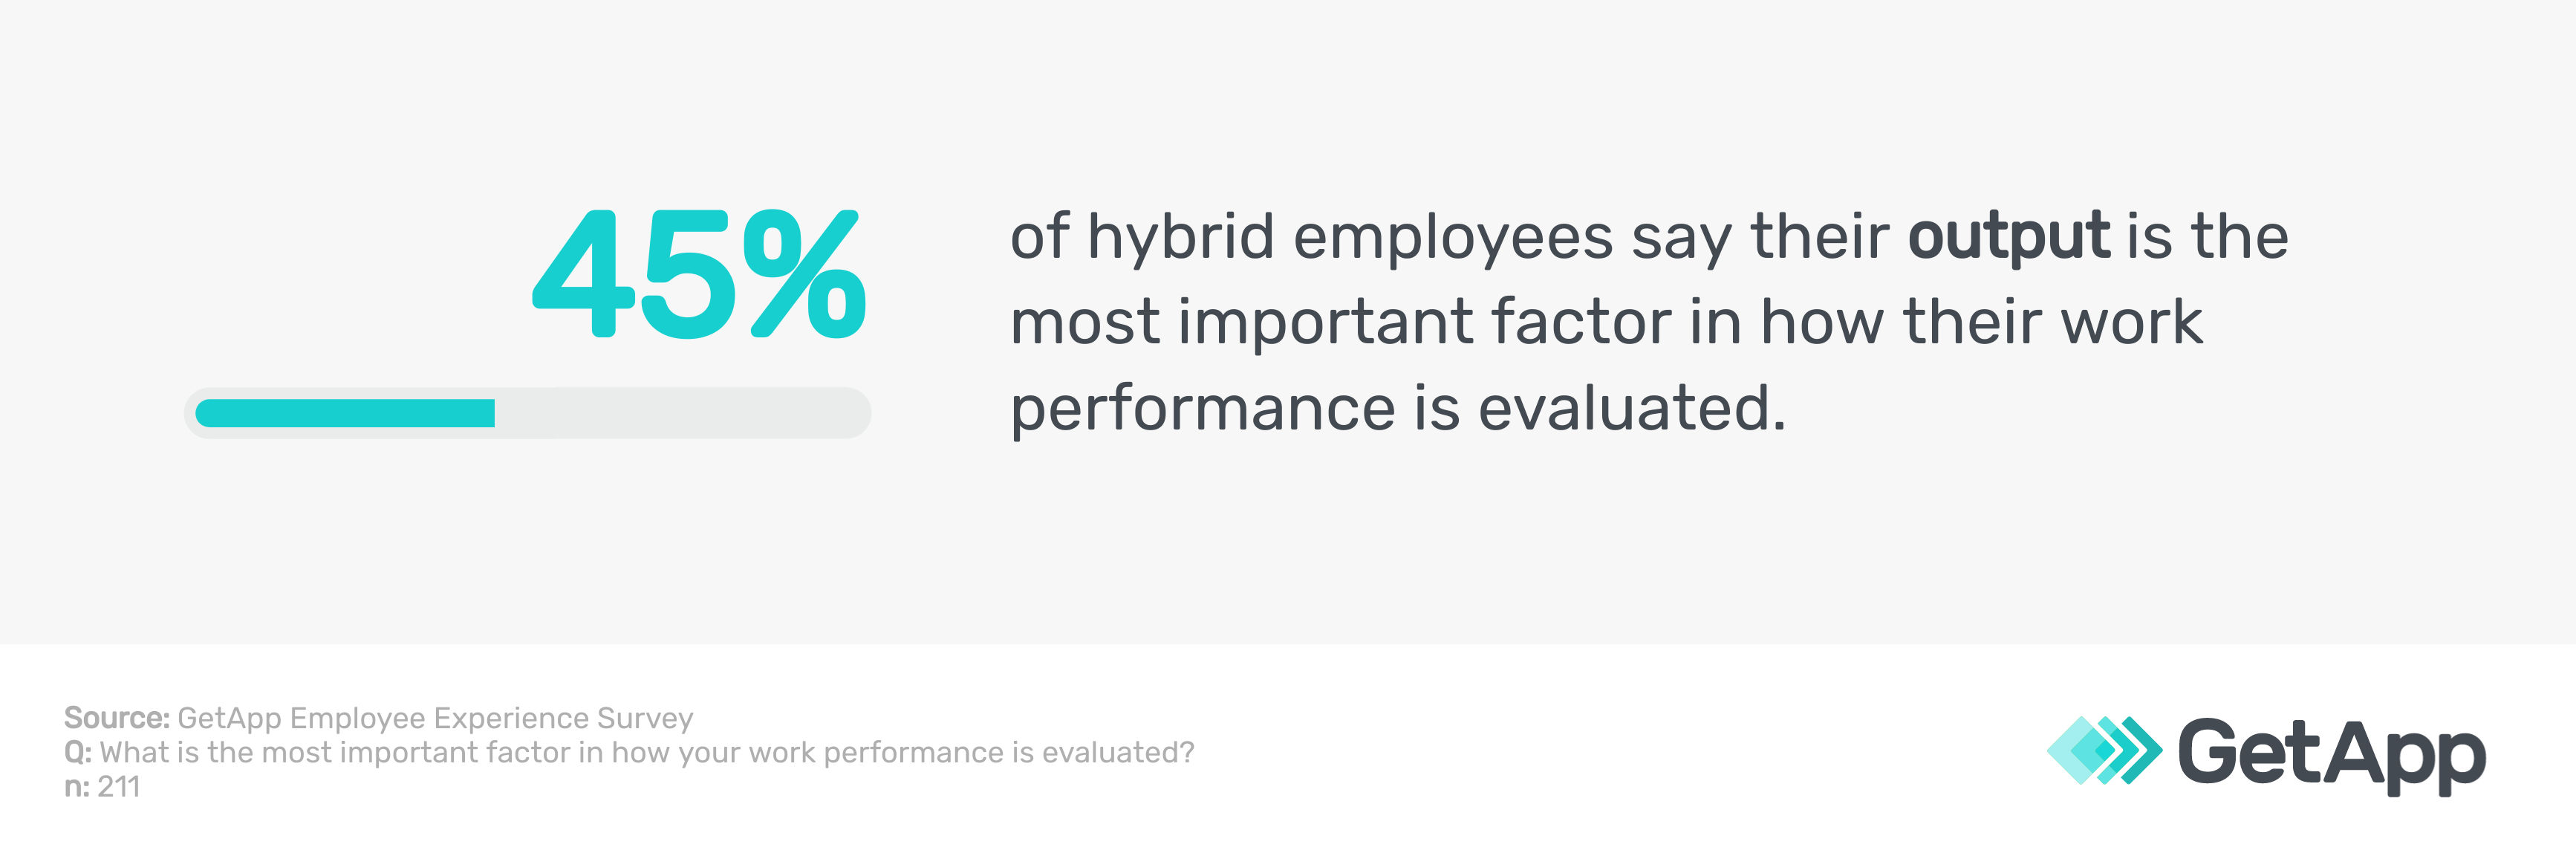 hybrid-employees-evaluated-on-output